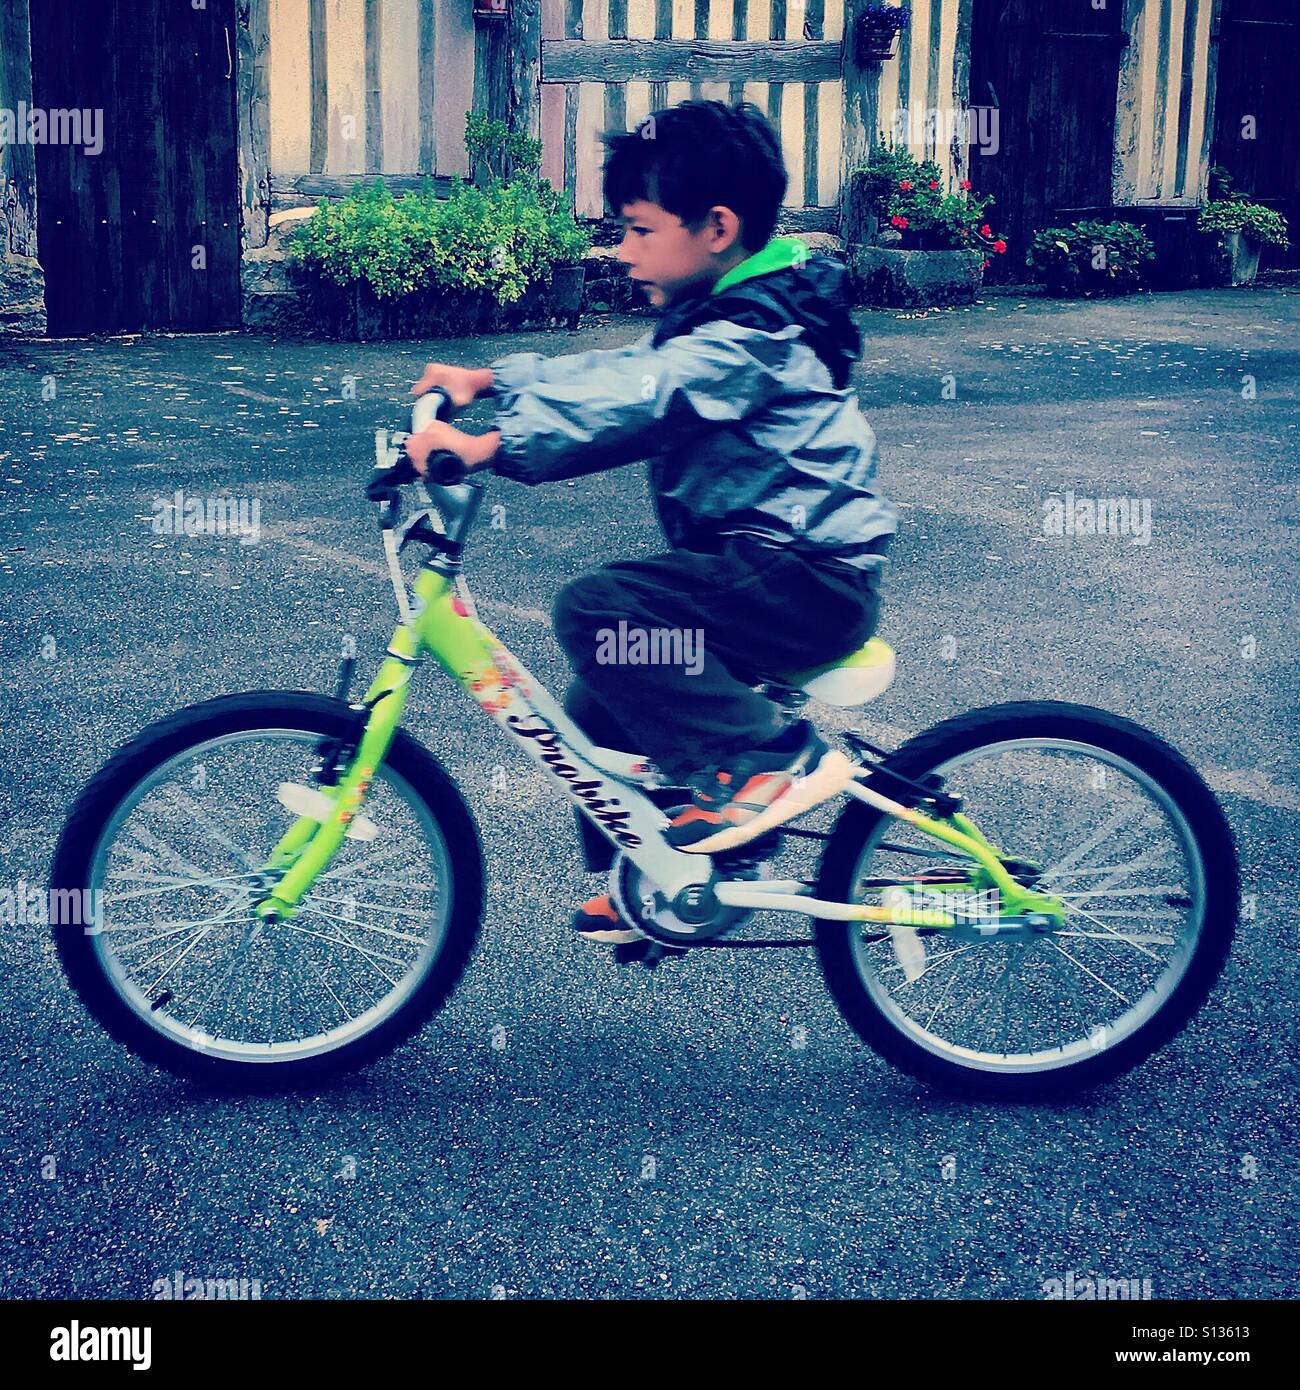 Boy on bike Stock Photo